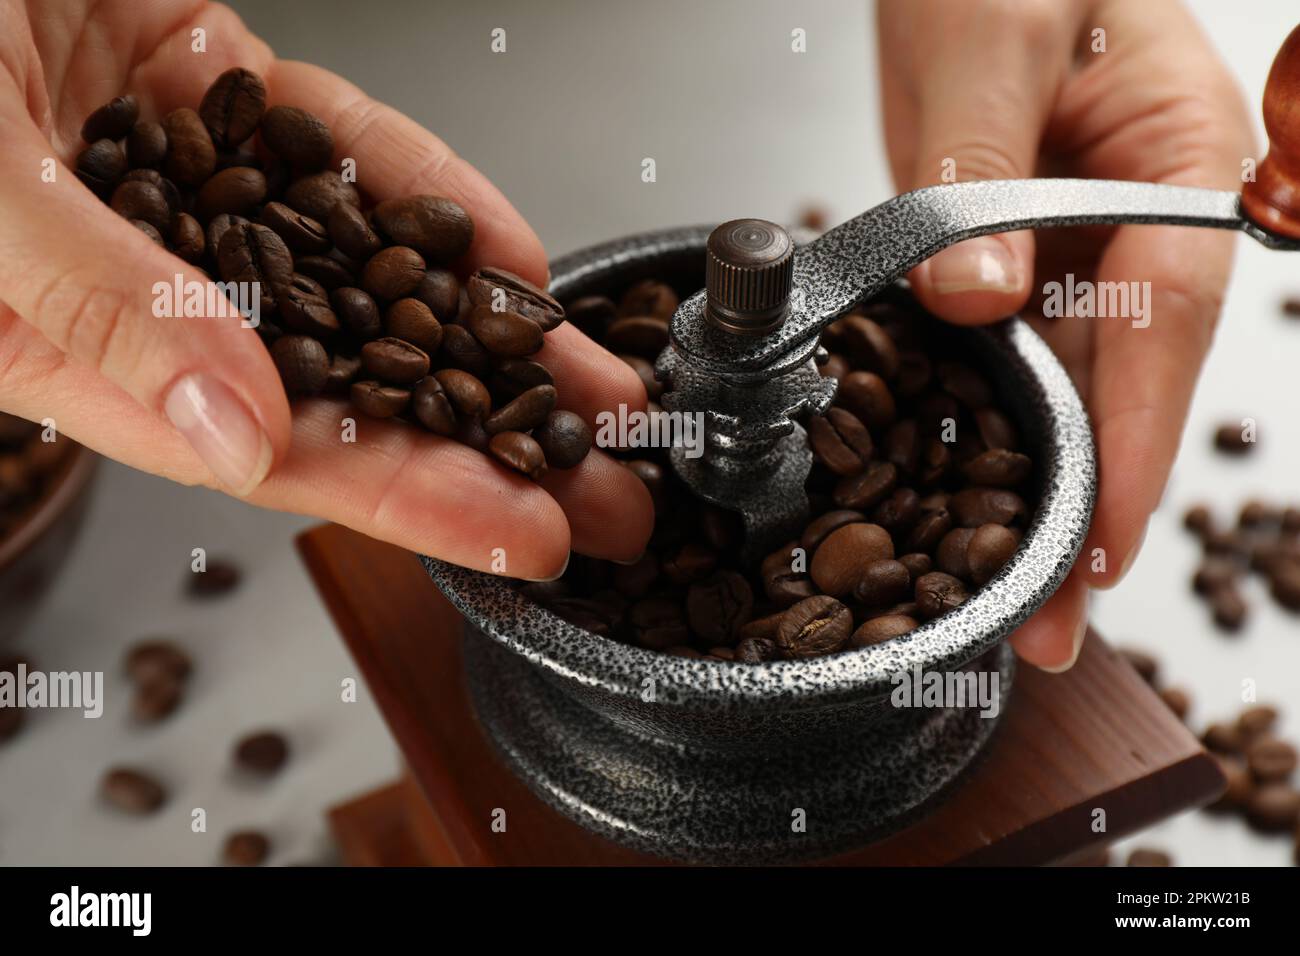 How to Grind Coffee (w/ Helpful Coffee Grind Chart!)